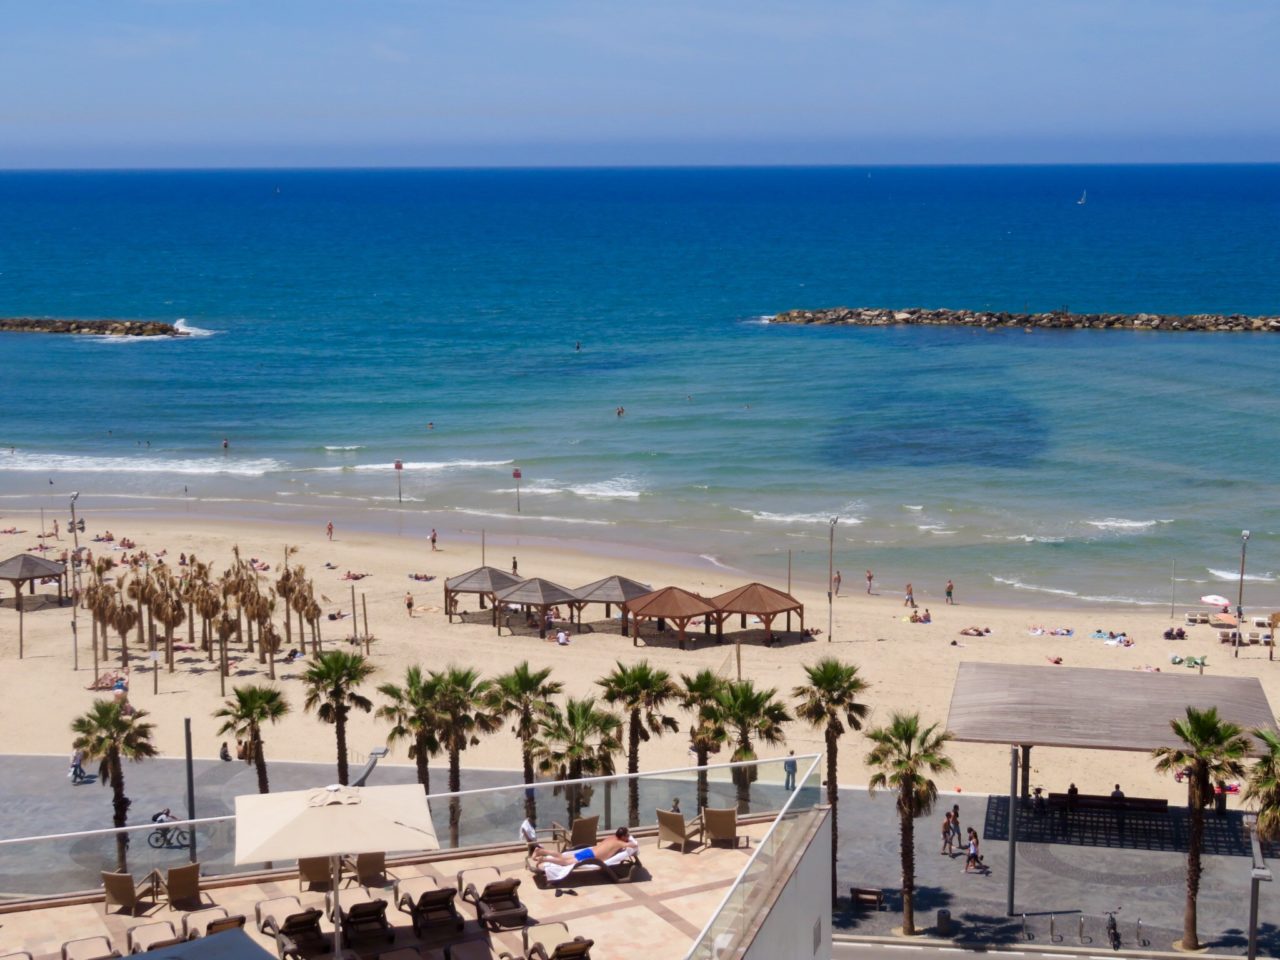 Tel Aviv Beach : View of Frishman Beach from our hotel room window